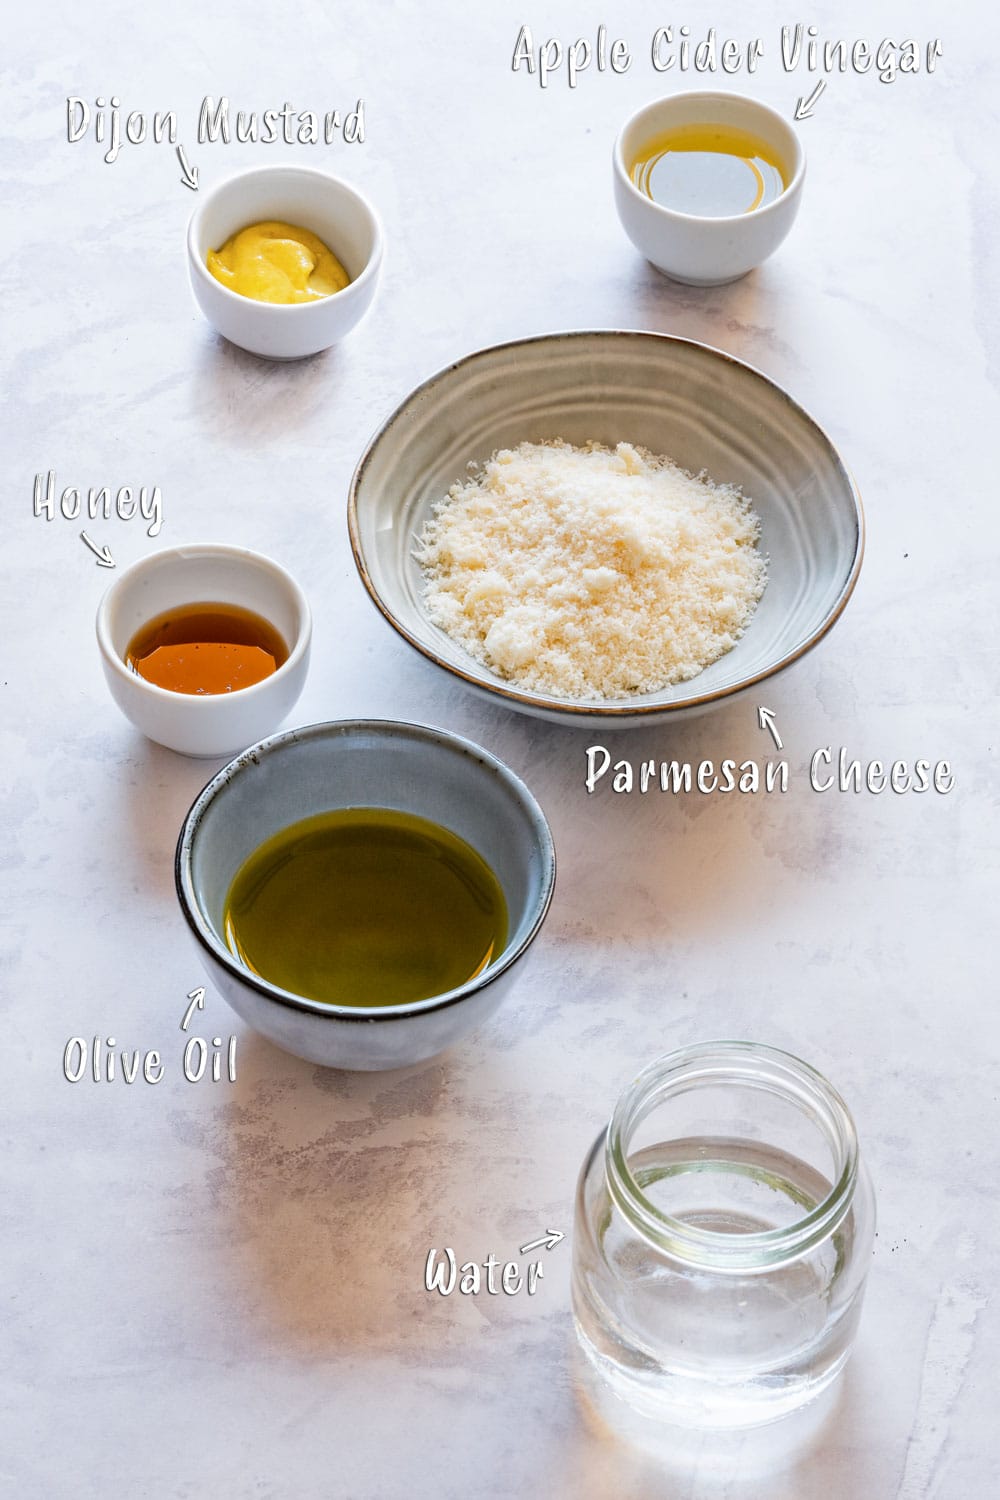 Parmesan vinaigrette ingredients on the table.